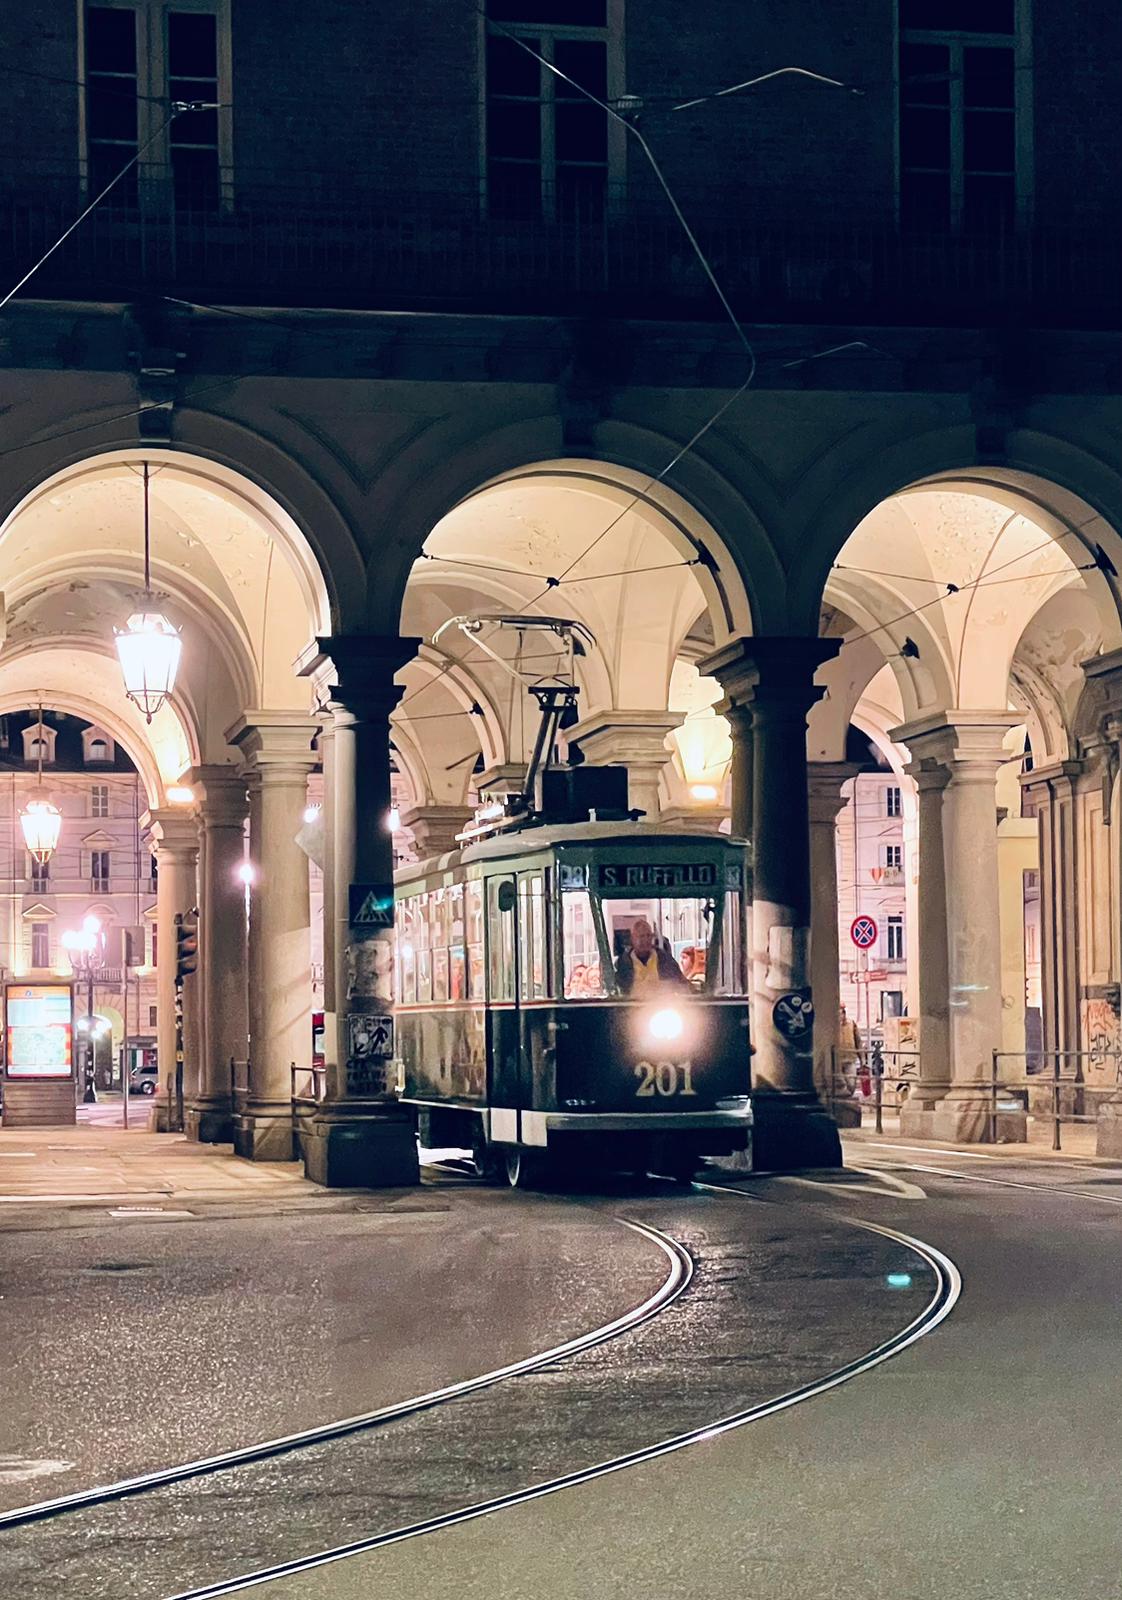 Tram 201 arriva in piazza Castello